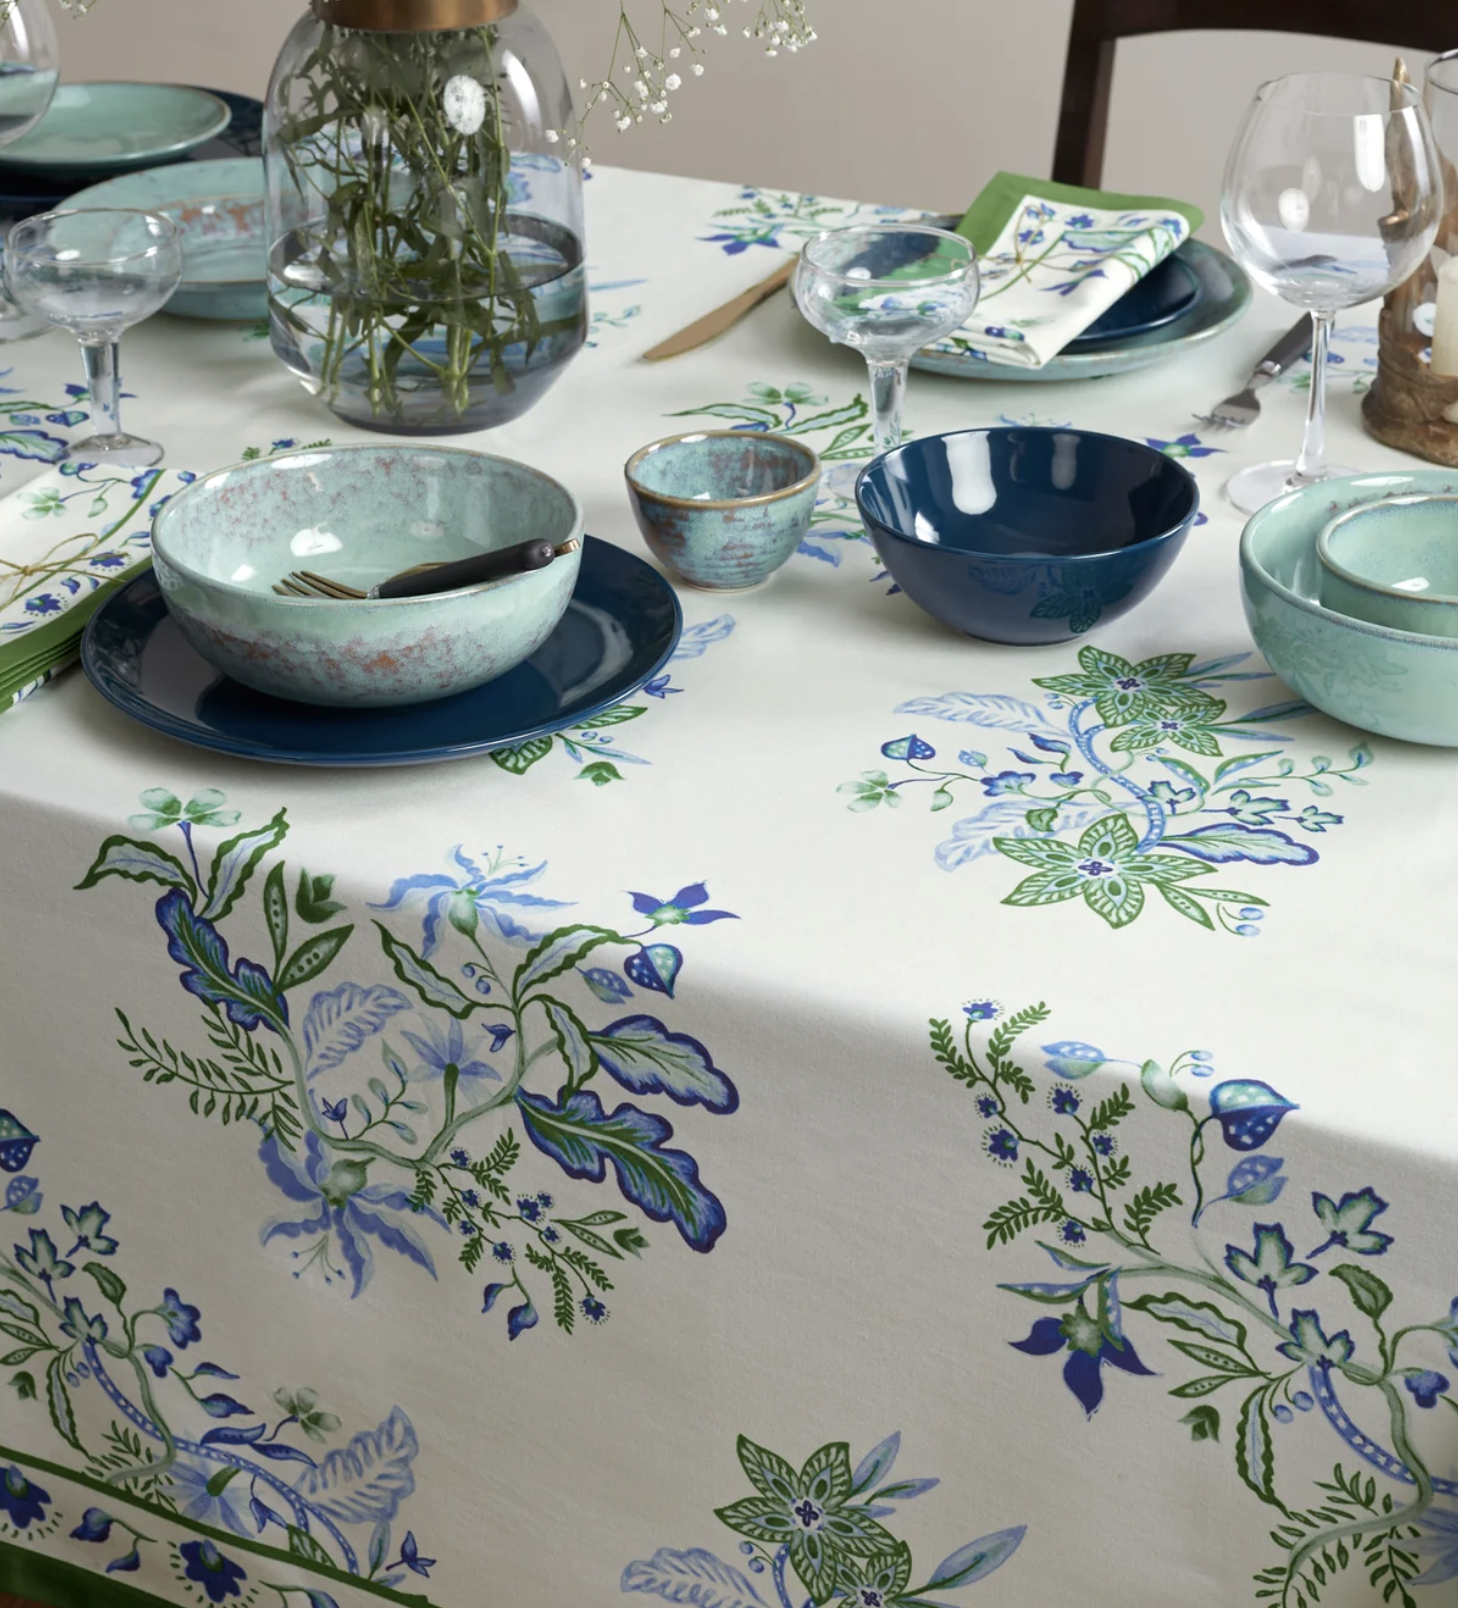 Flora - Tablecloth detail